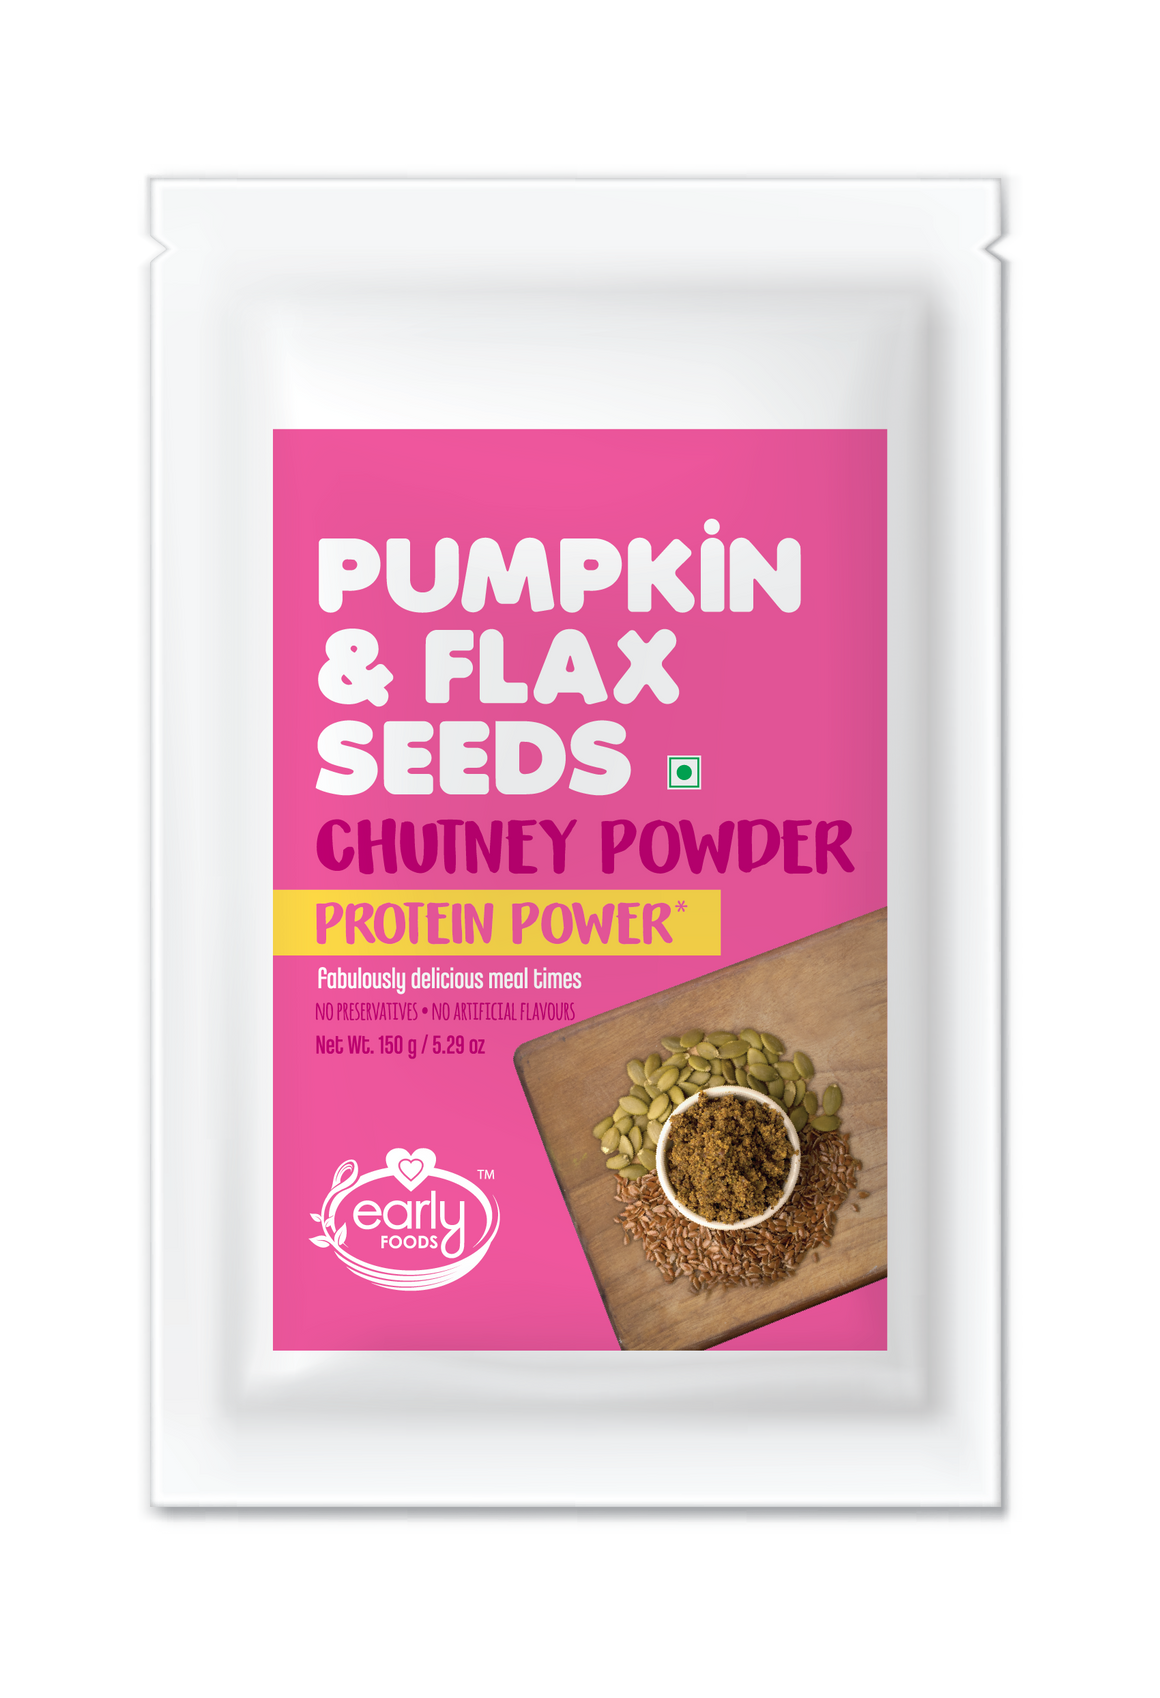 Pumpkin & Flax Seeds Chutney Powder, 150g